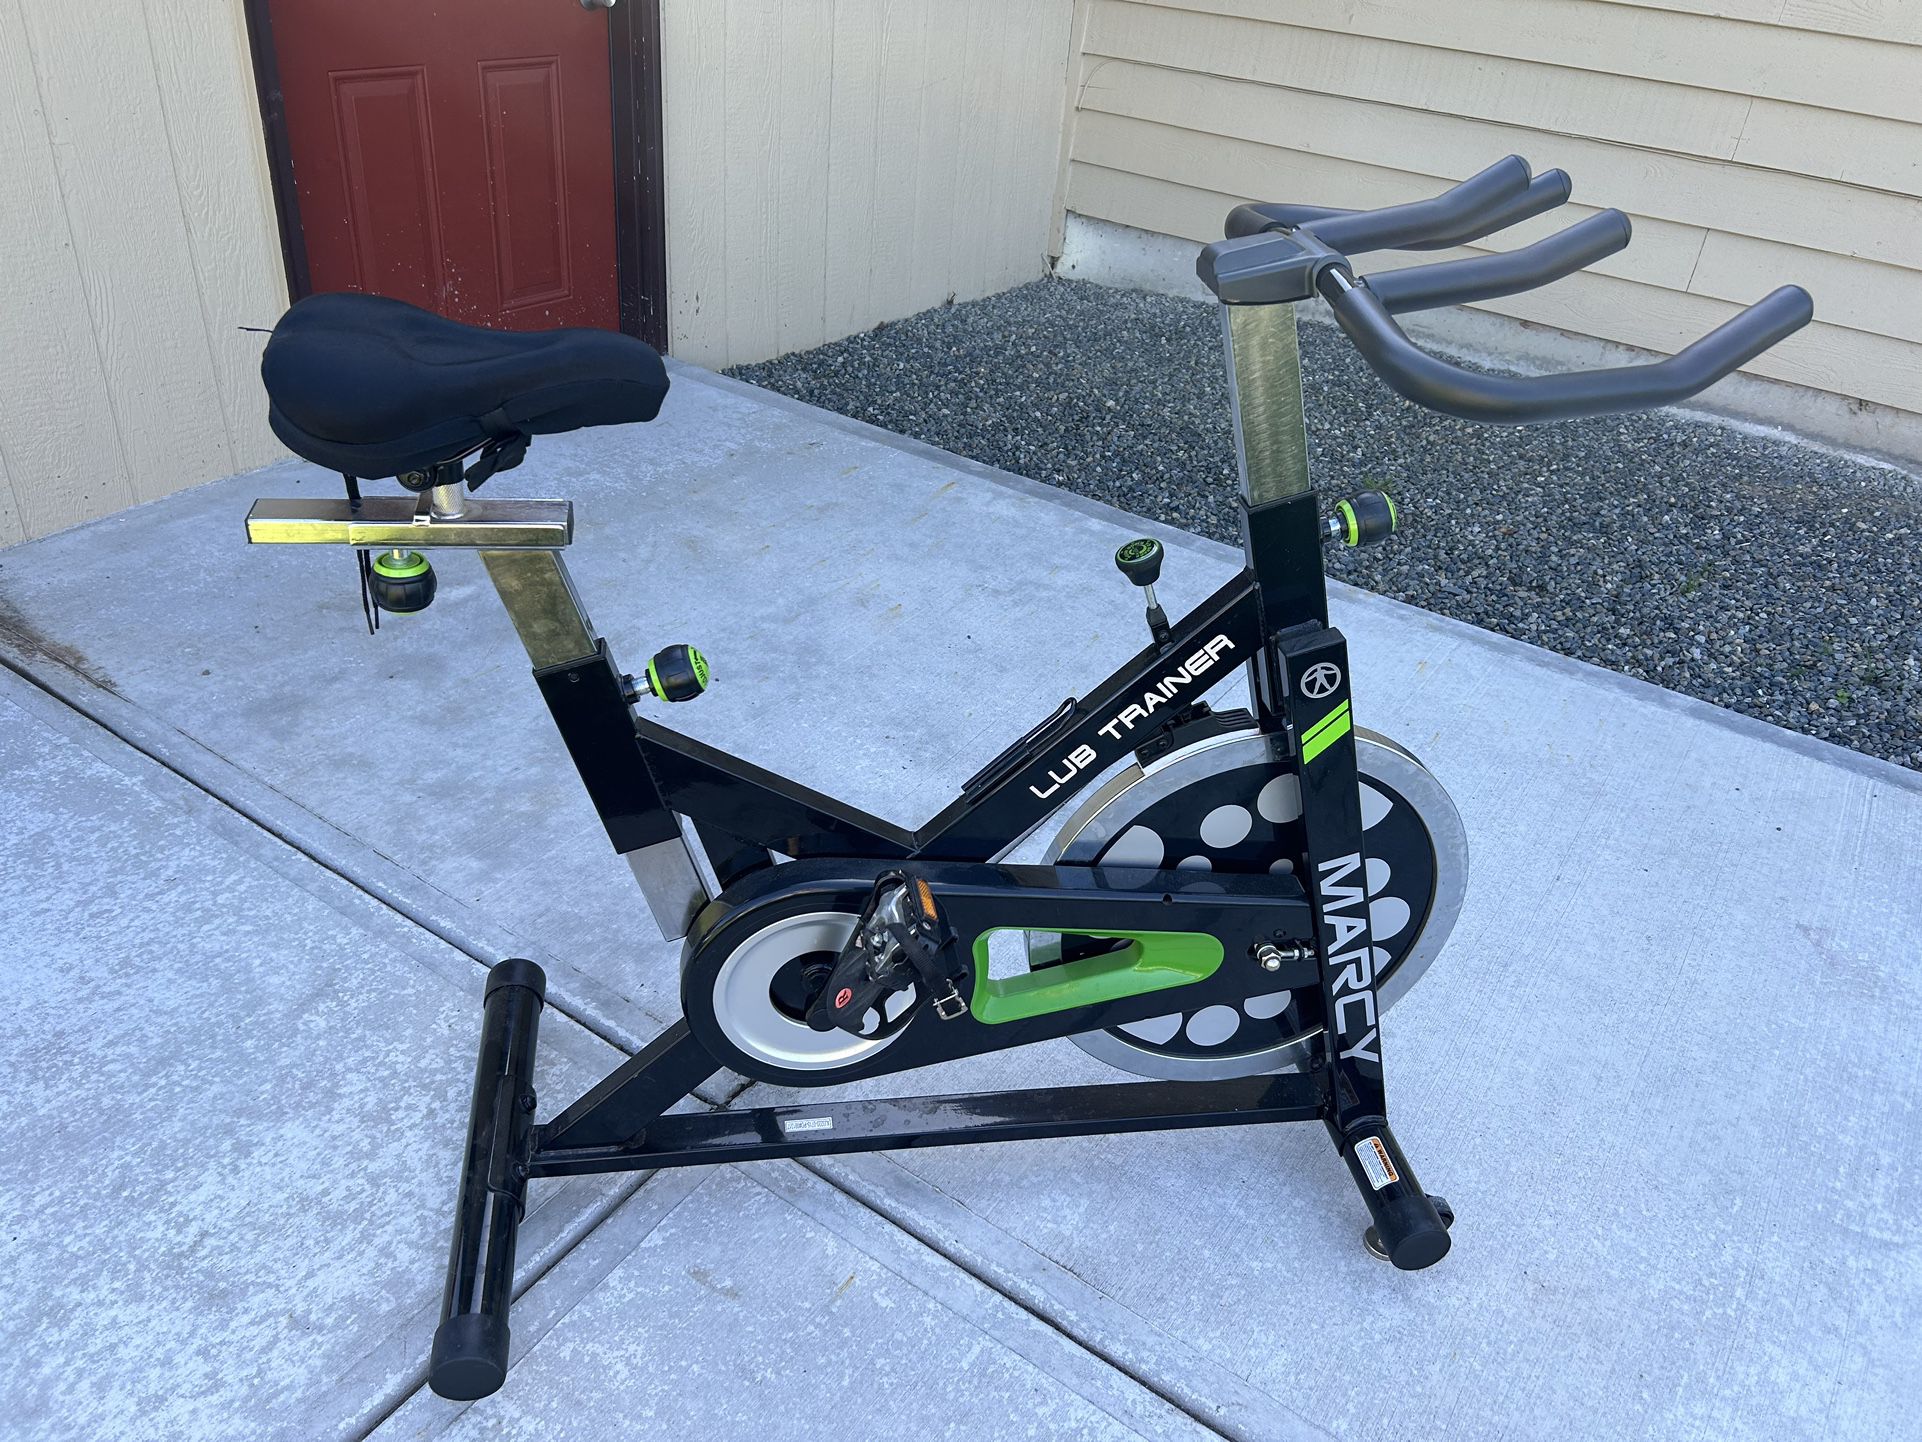 Marcy Exercise Bike $300+ Retail